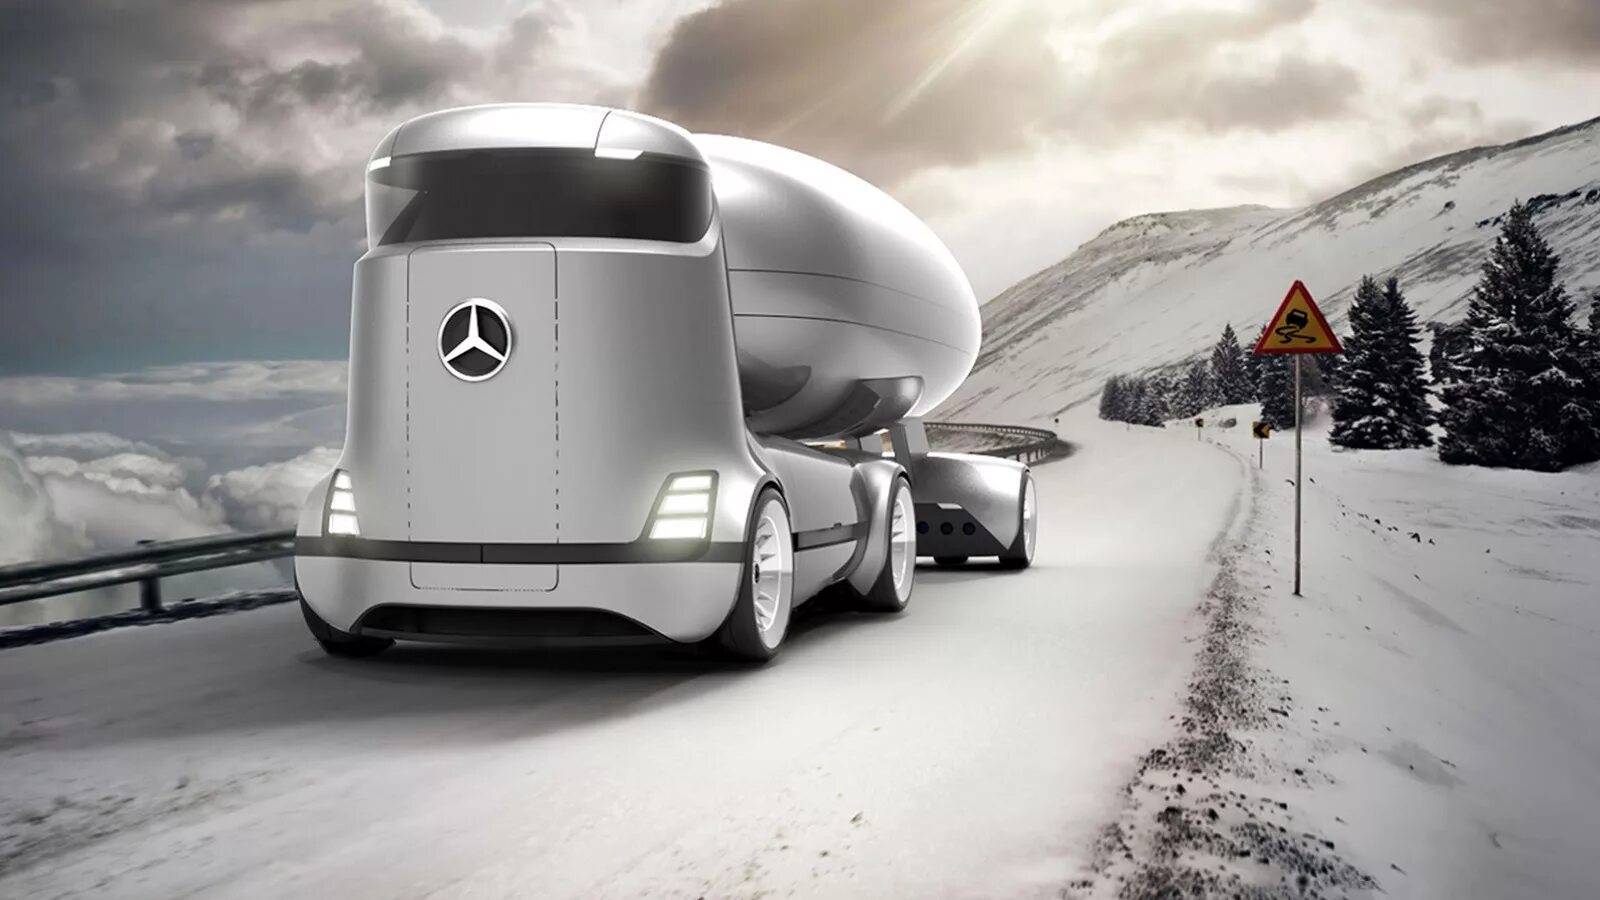 Включи машину дав. Mercedes Benz Future Truck. Грузовик Мерседес концепт. Mercedes Benz грузовик Design. Тягач Мерседес 2100.